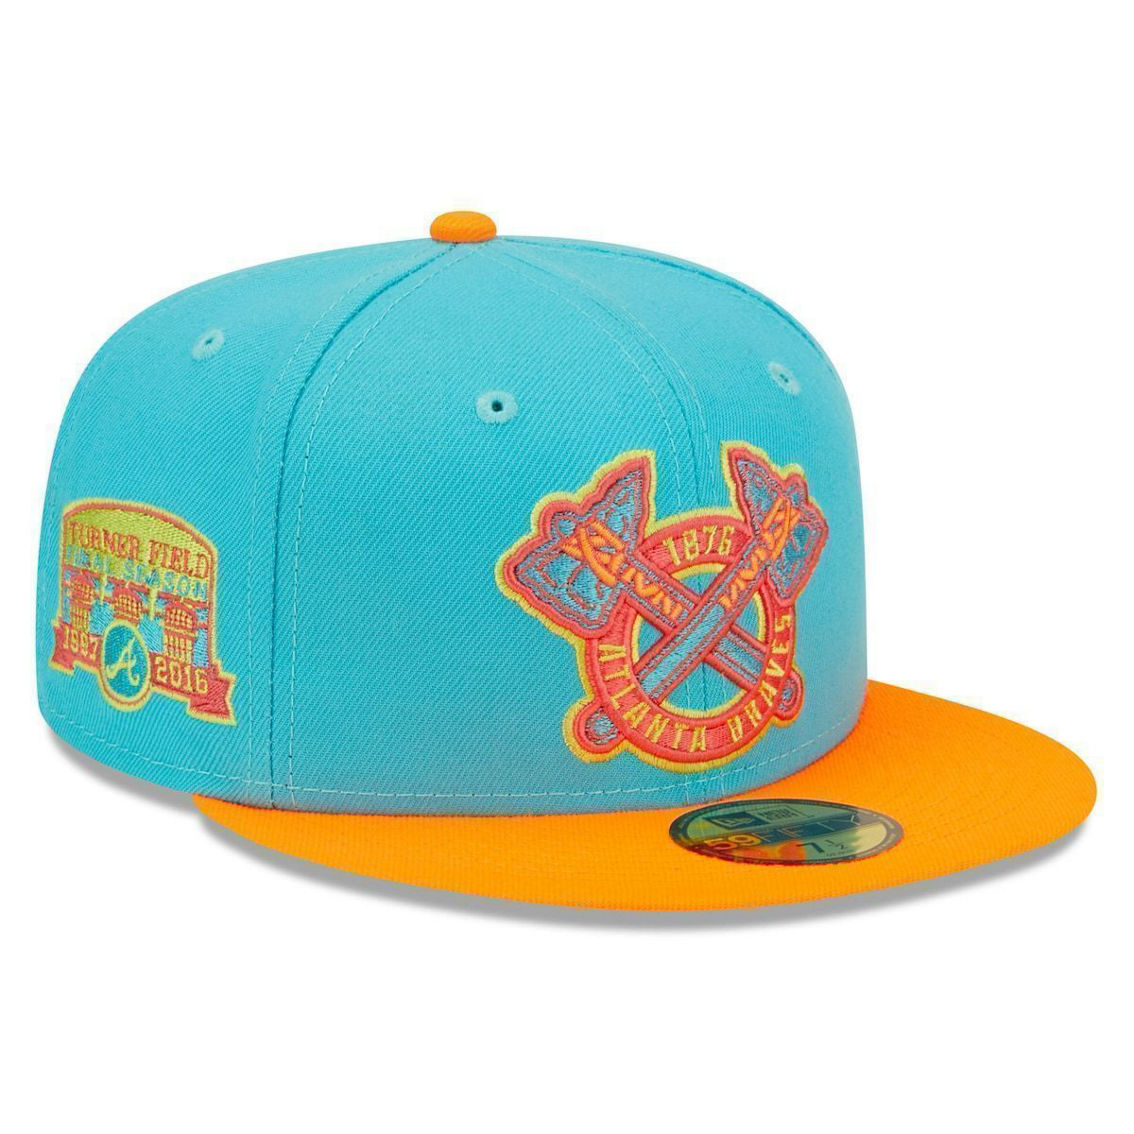 New Era Men's Blue/Orange Atlanta Braves Vice Highlighter 59FIFTY Fitted Hat - Image 2 of 4